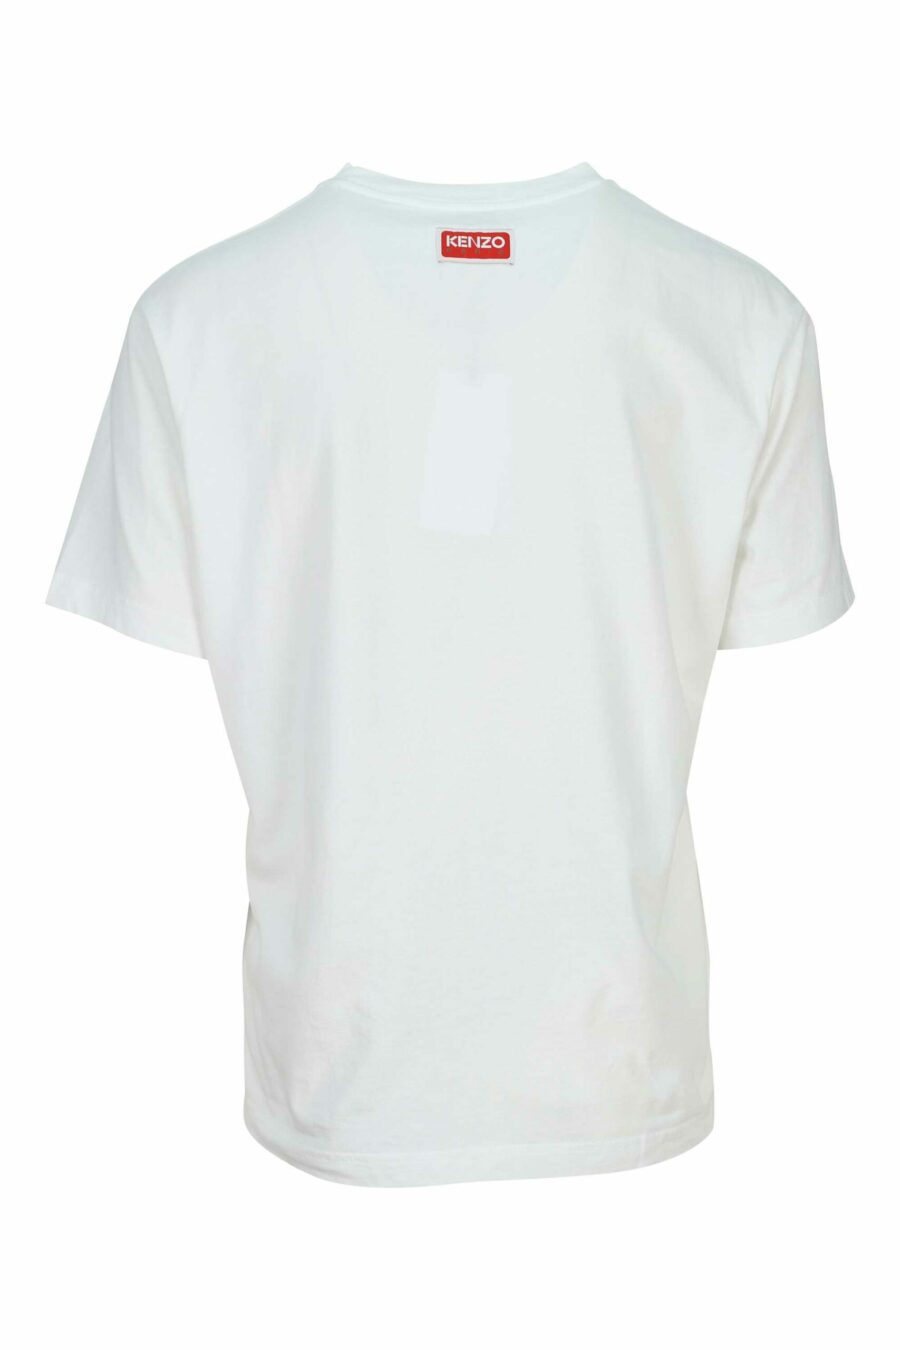 Camiseta "oversize" blanca con maxilogo tigre - 3612230627758 1 scaled